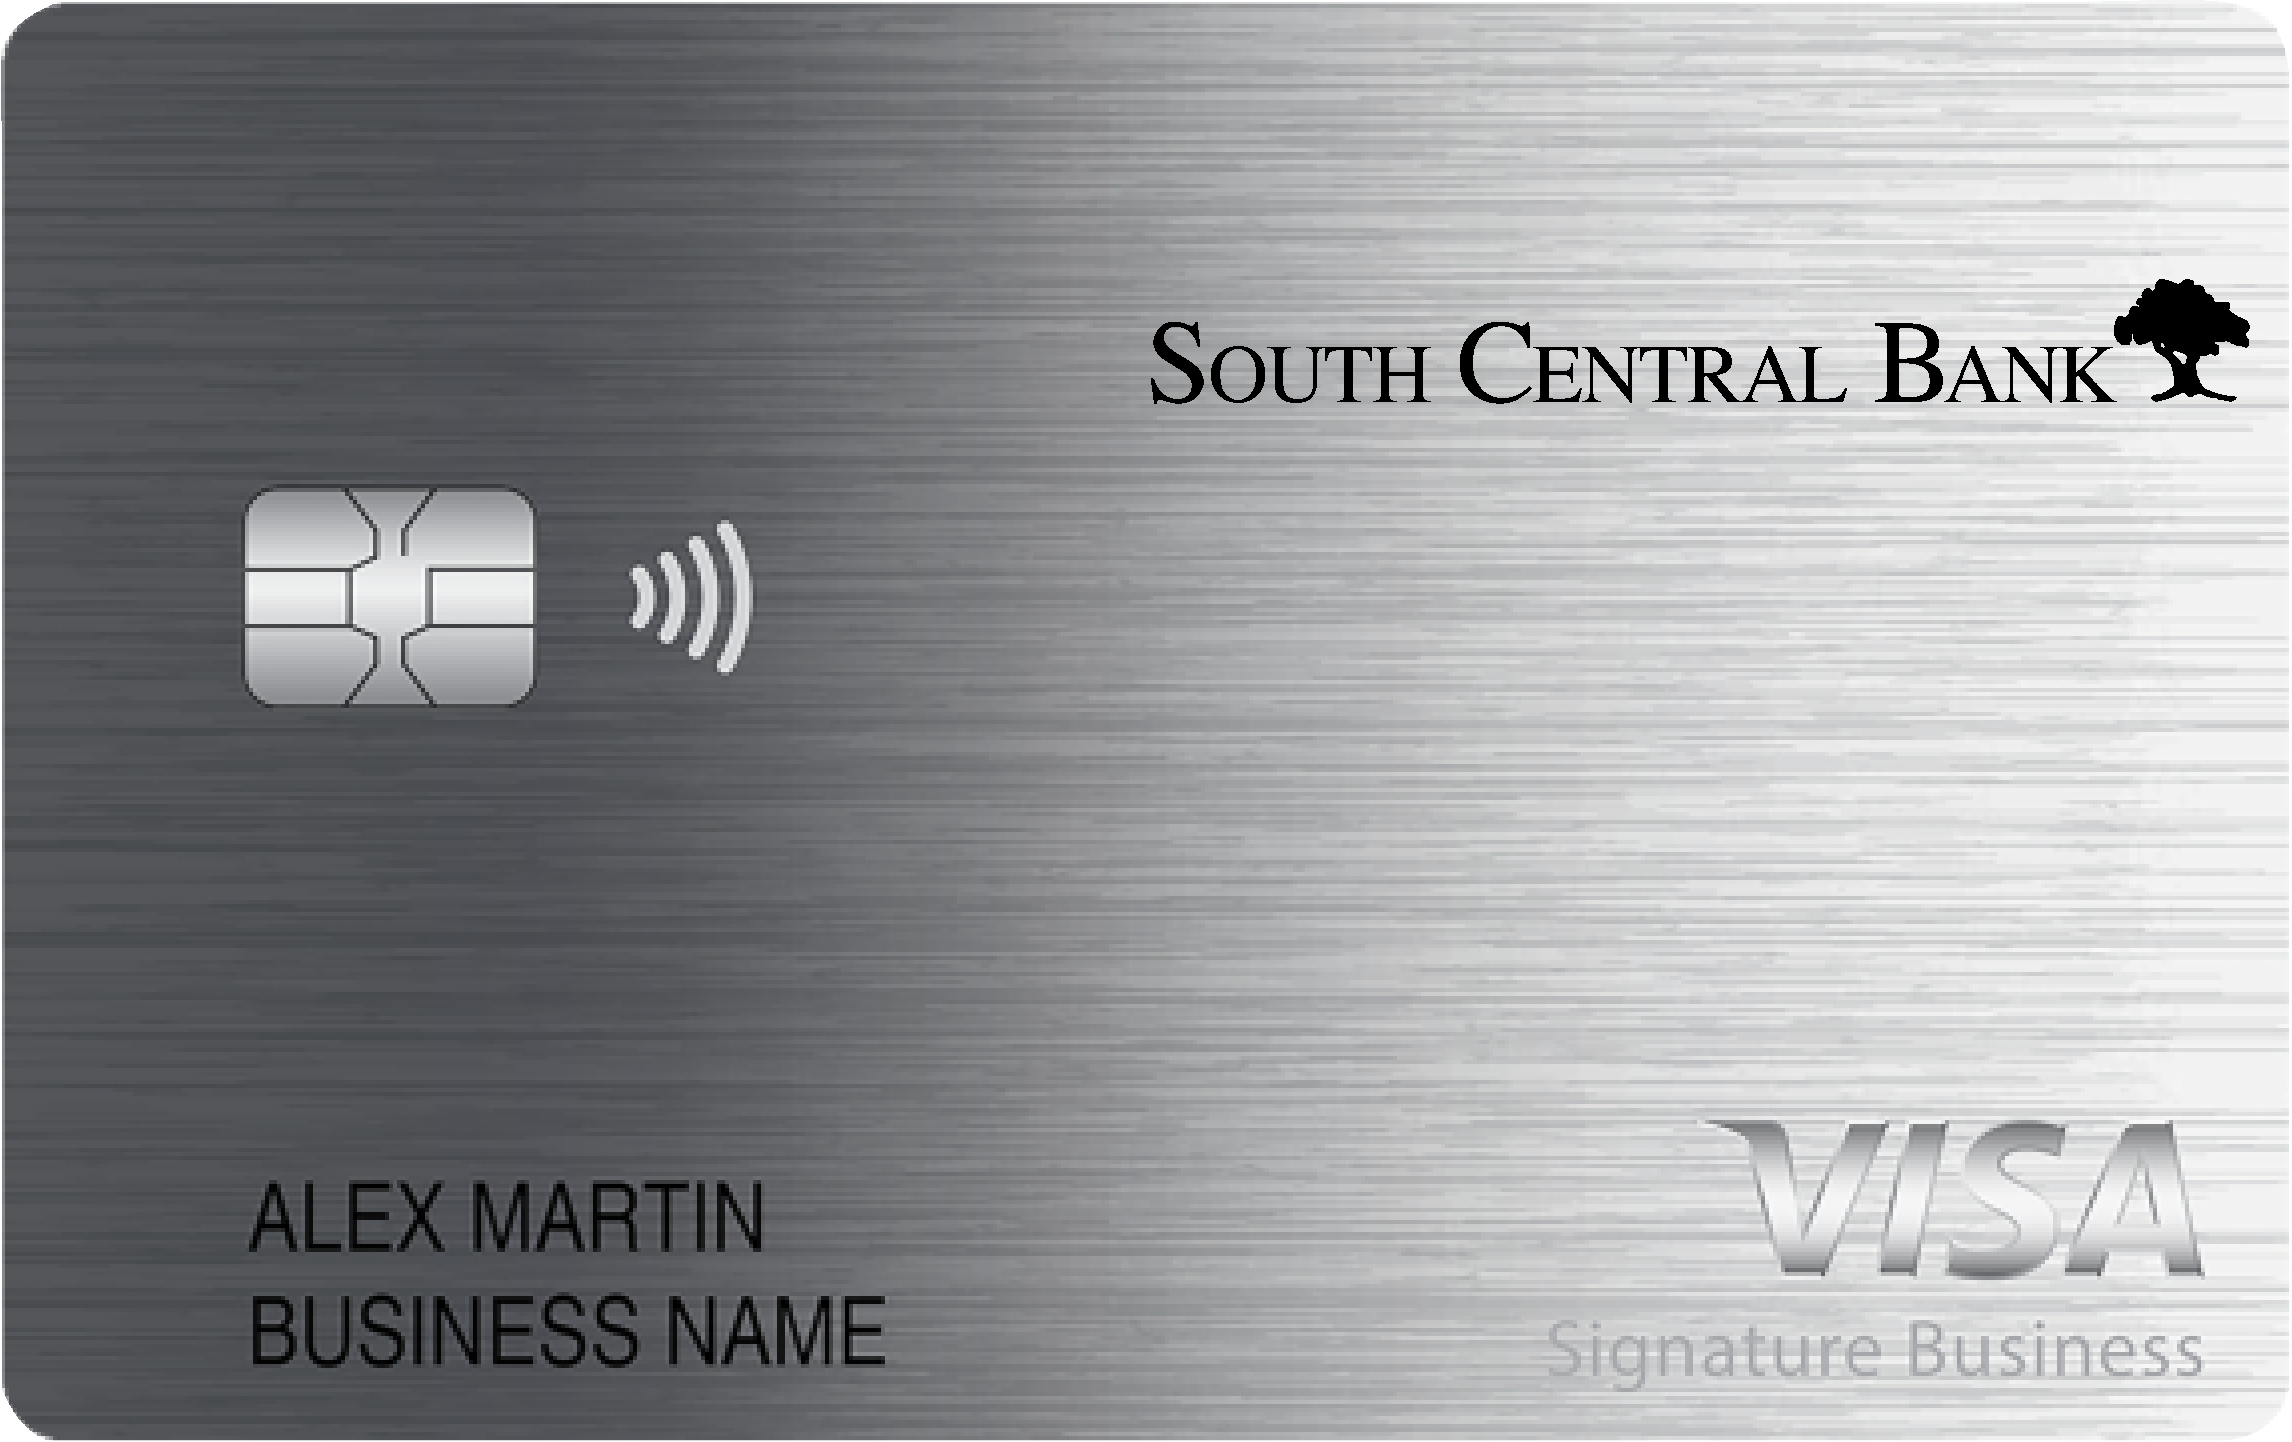 South Central Bank Inc Smart Business Rewards Card